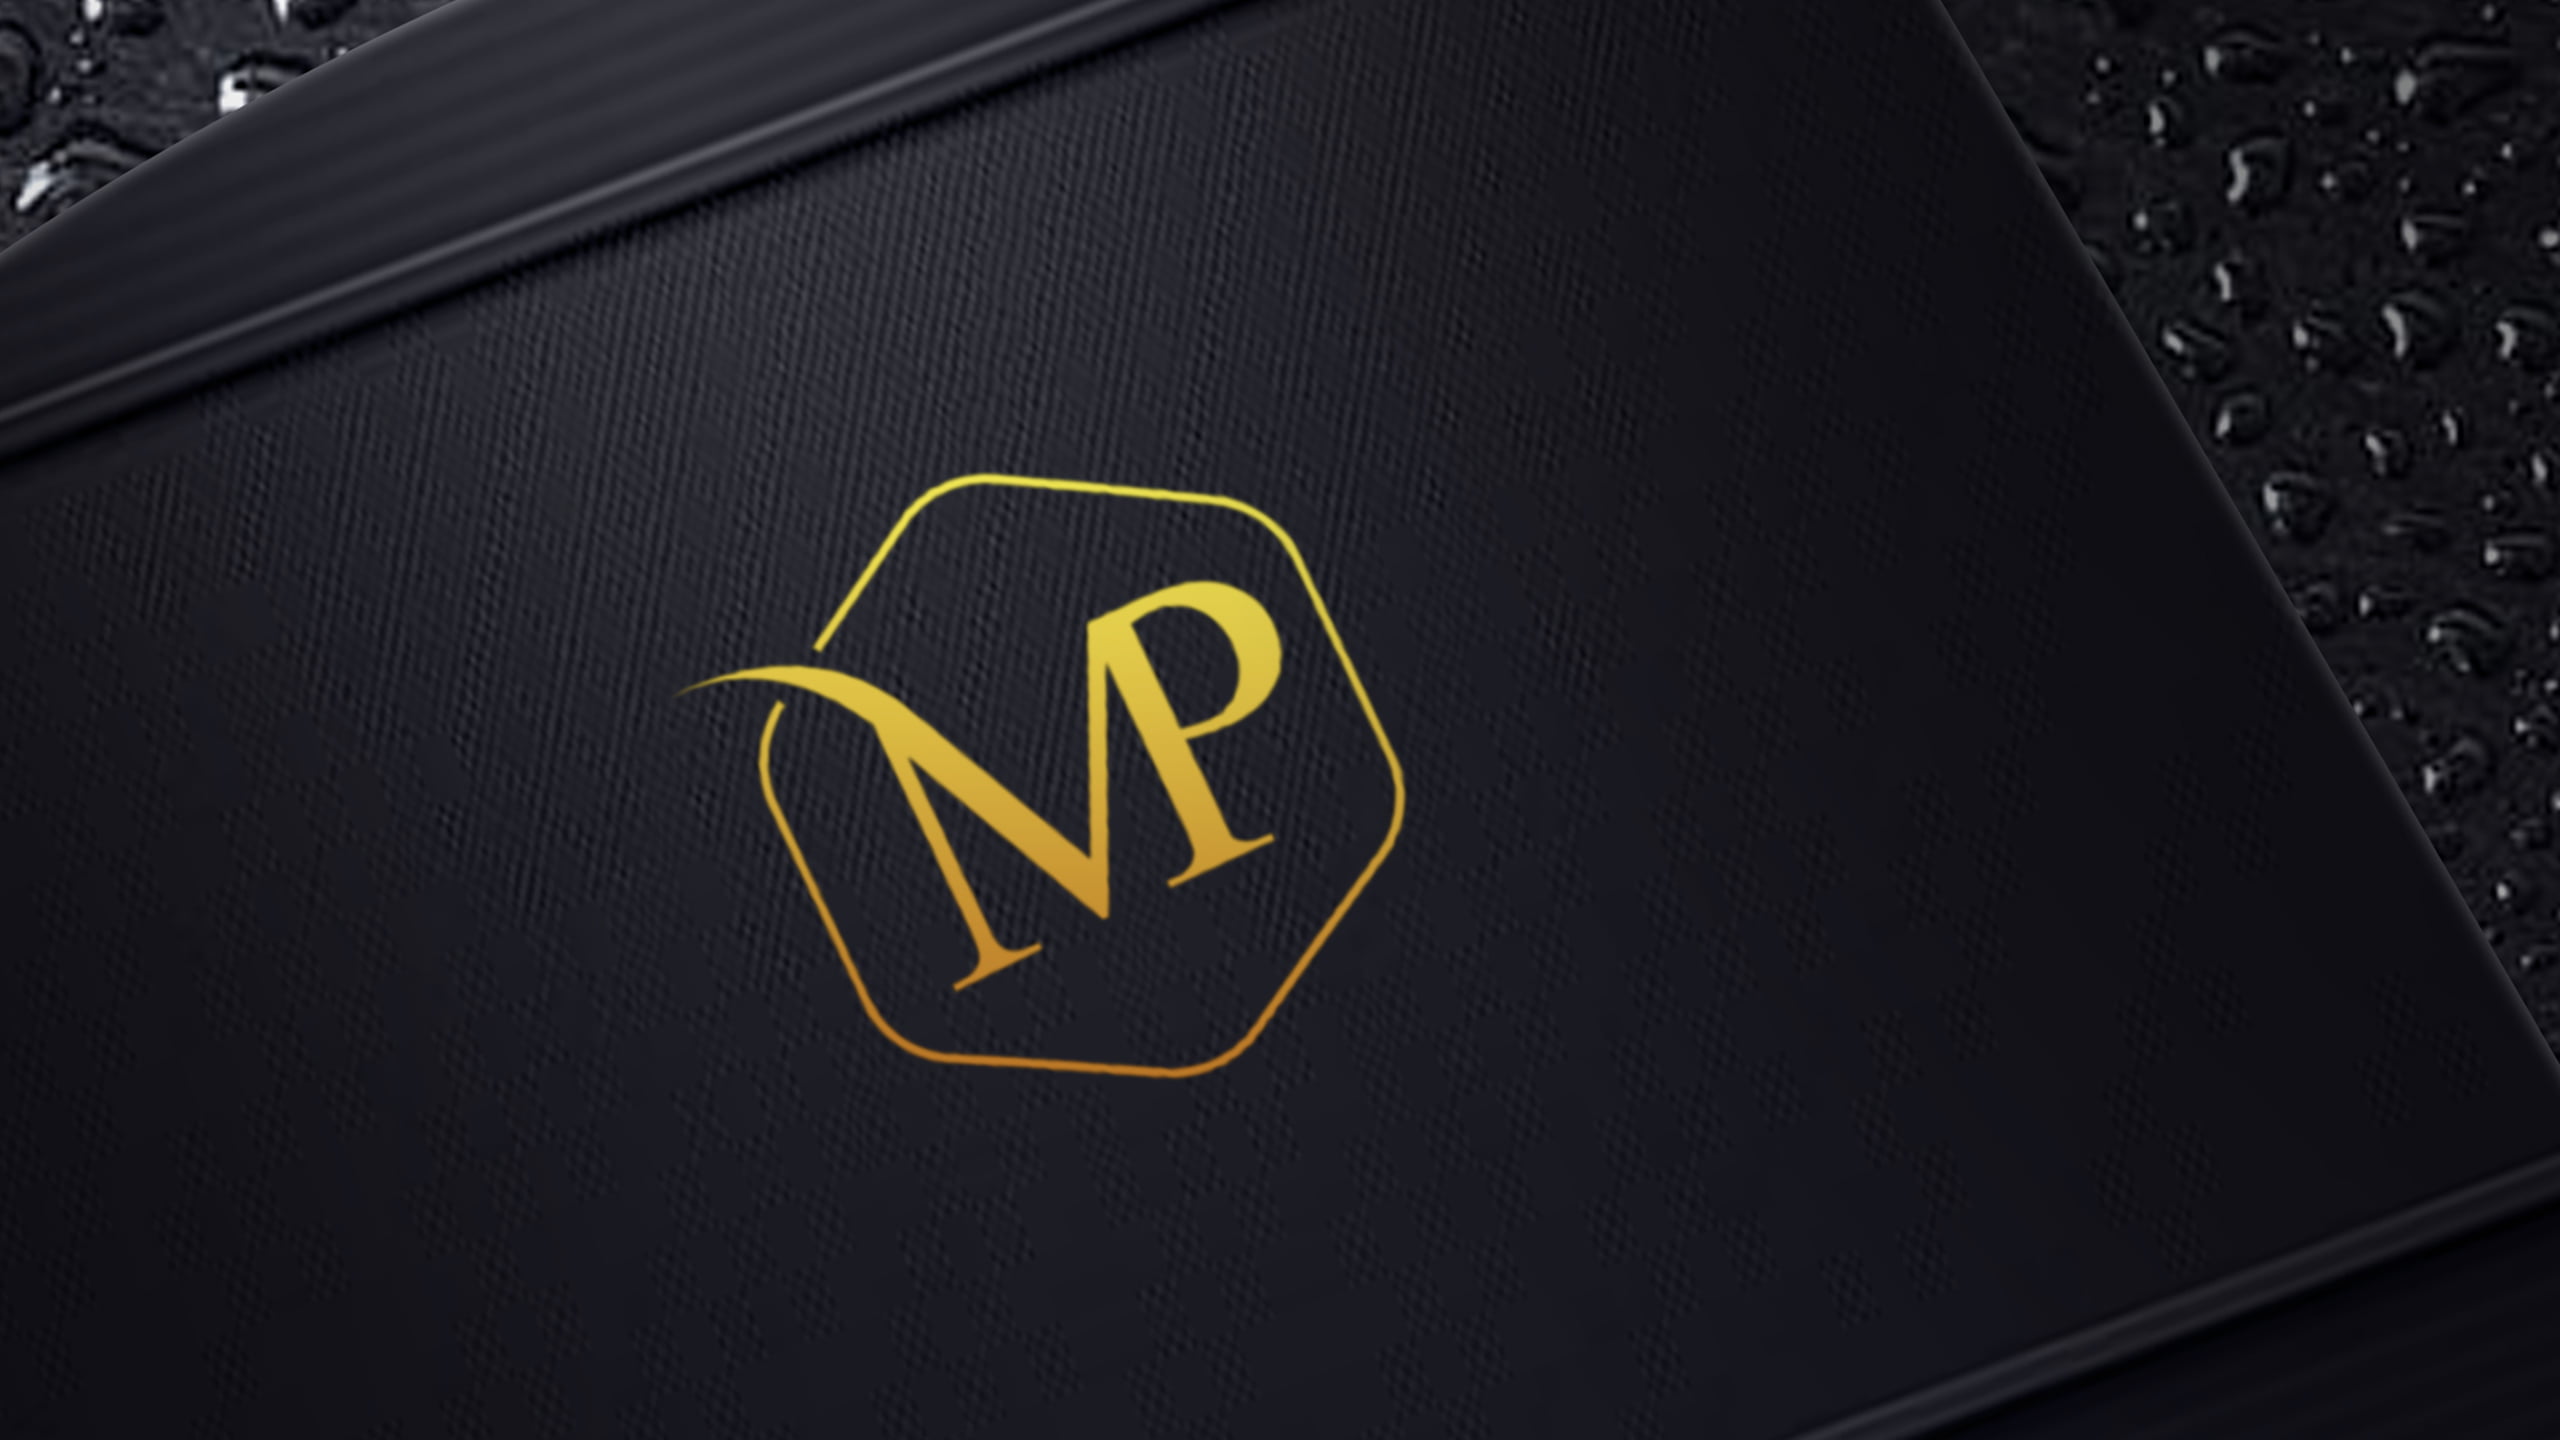 MP logo design concept by Miloš Miljanović on Dribbble